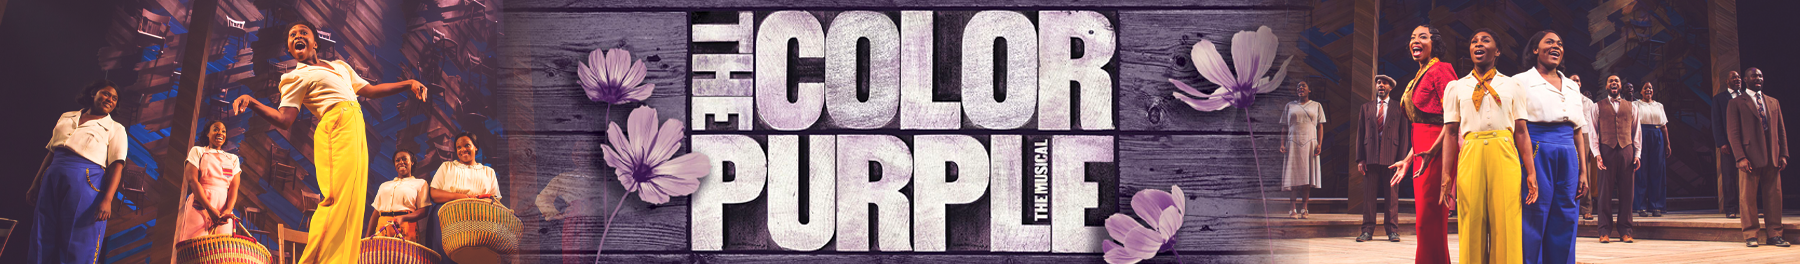 The Color Purple Broadway Show